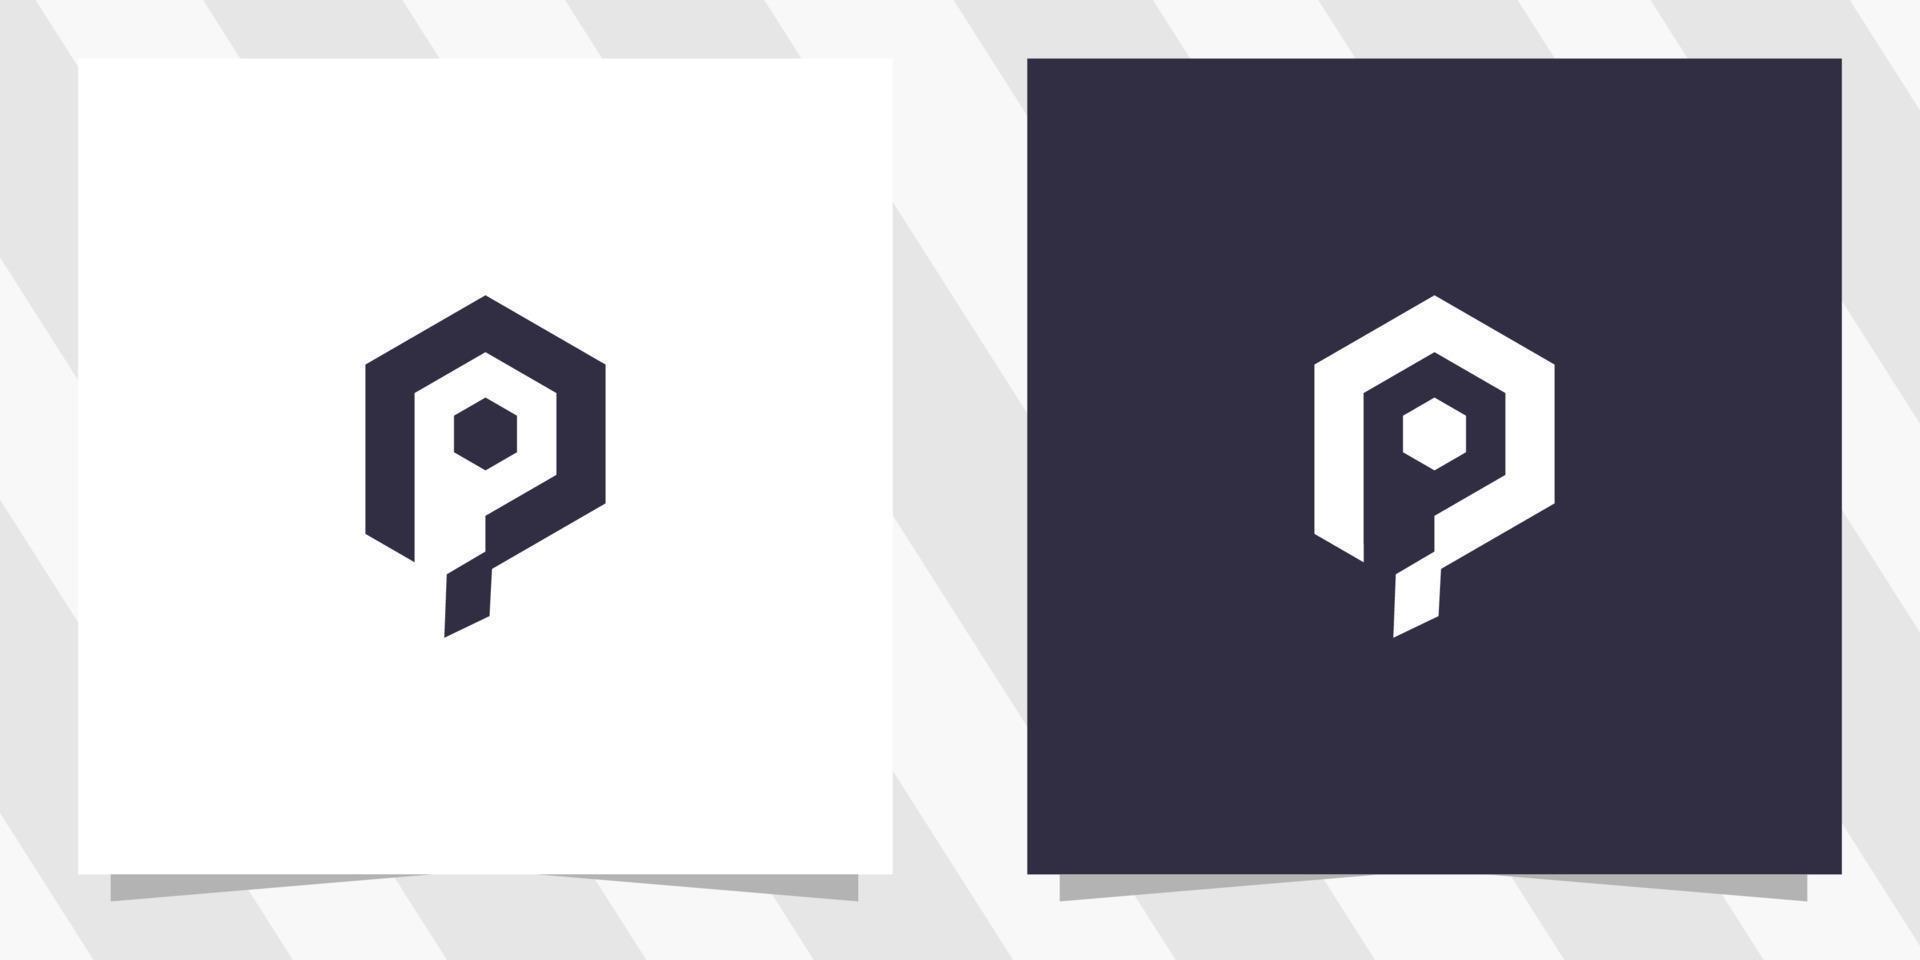 Buchstabe p-Logo-Design-Vorlage vektor